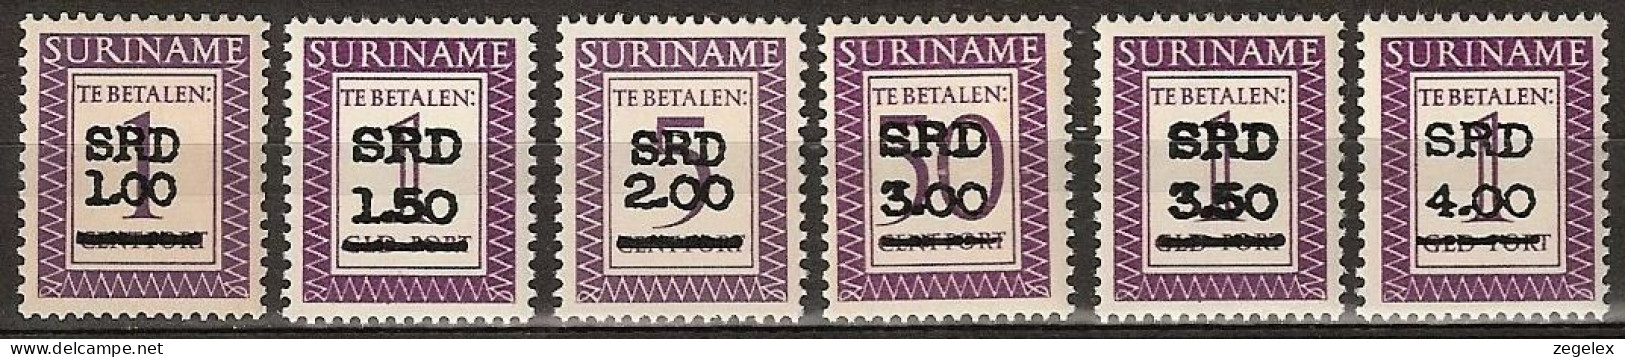 Suriname 2007  Portzegels Overdrukt, Postage Due Overprint MNH/**/Postfris  - Surinam